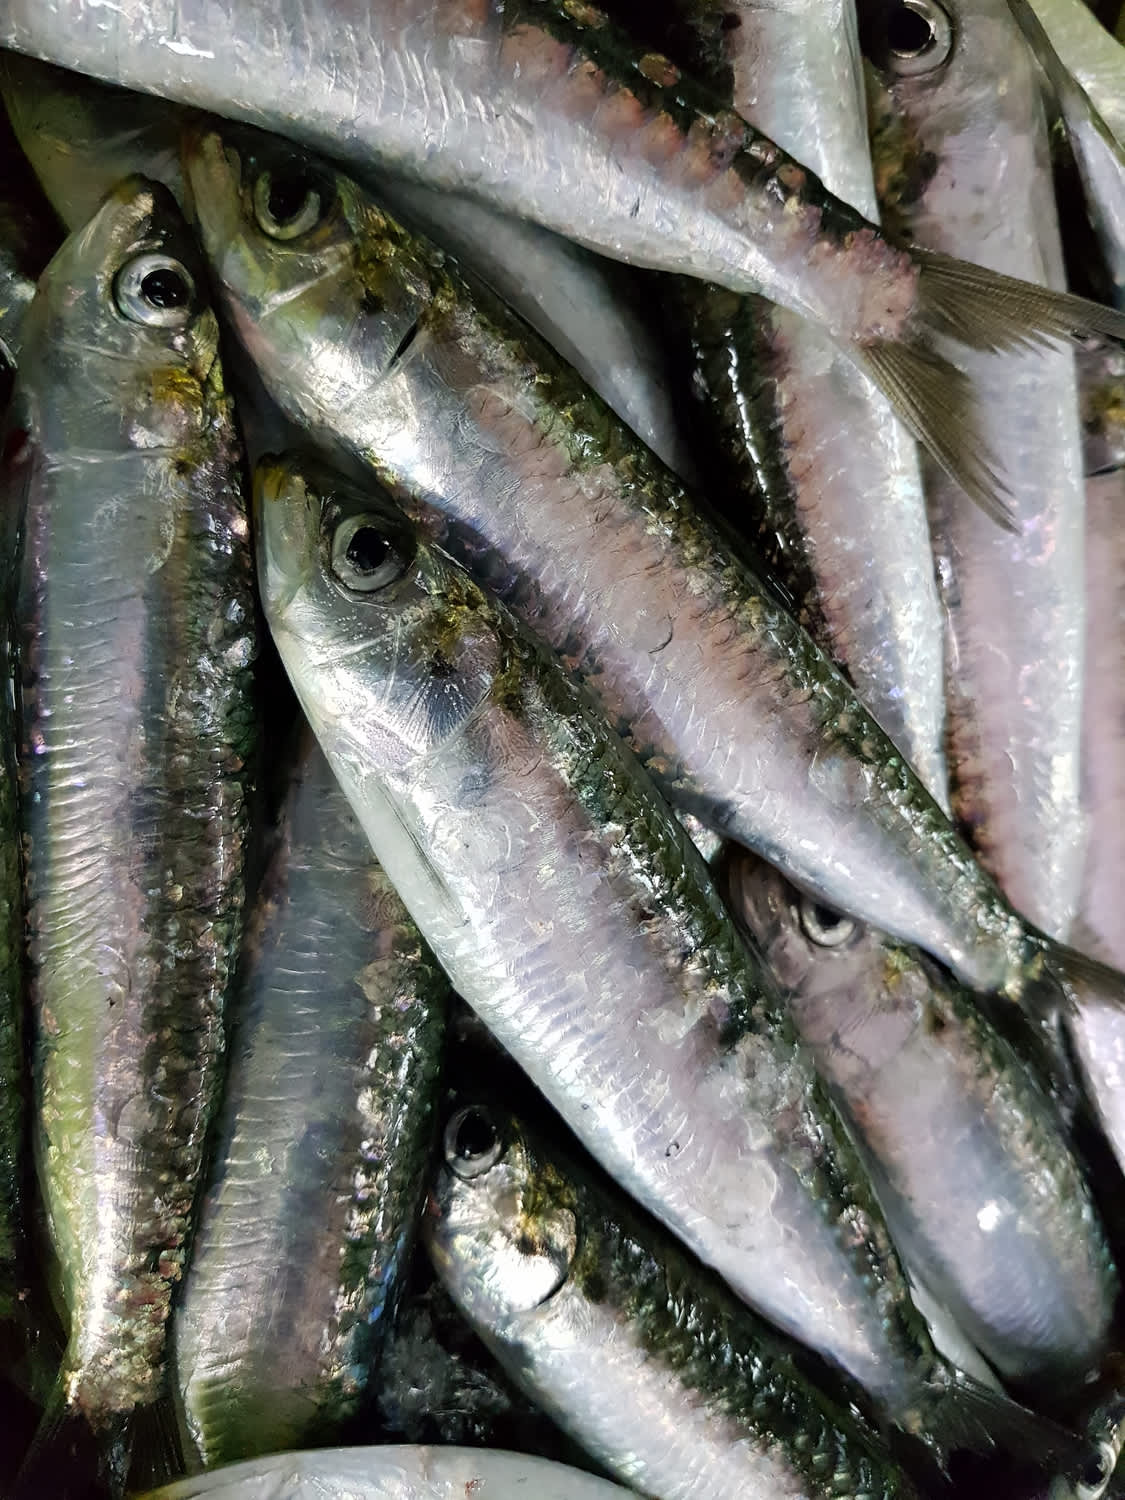 Close up of sardines